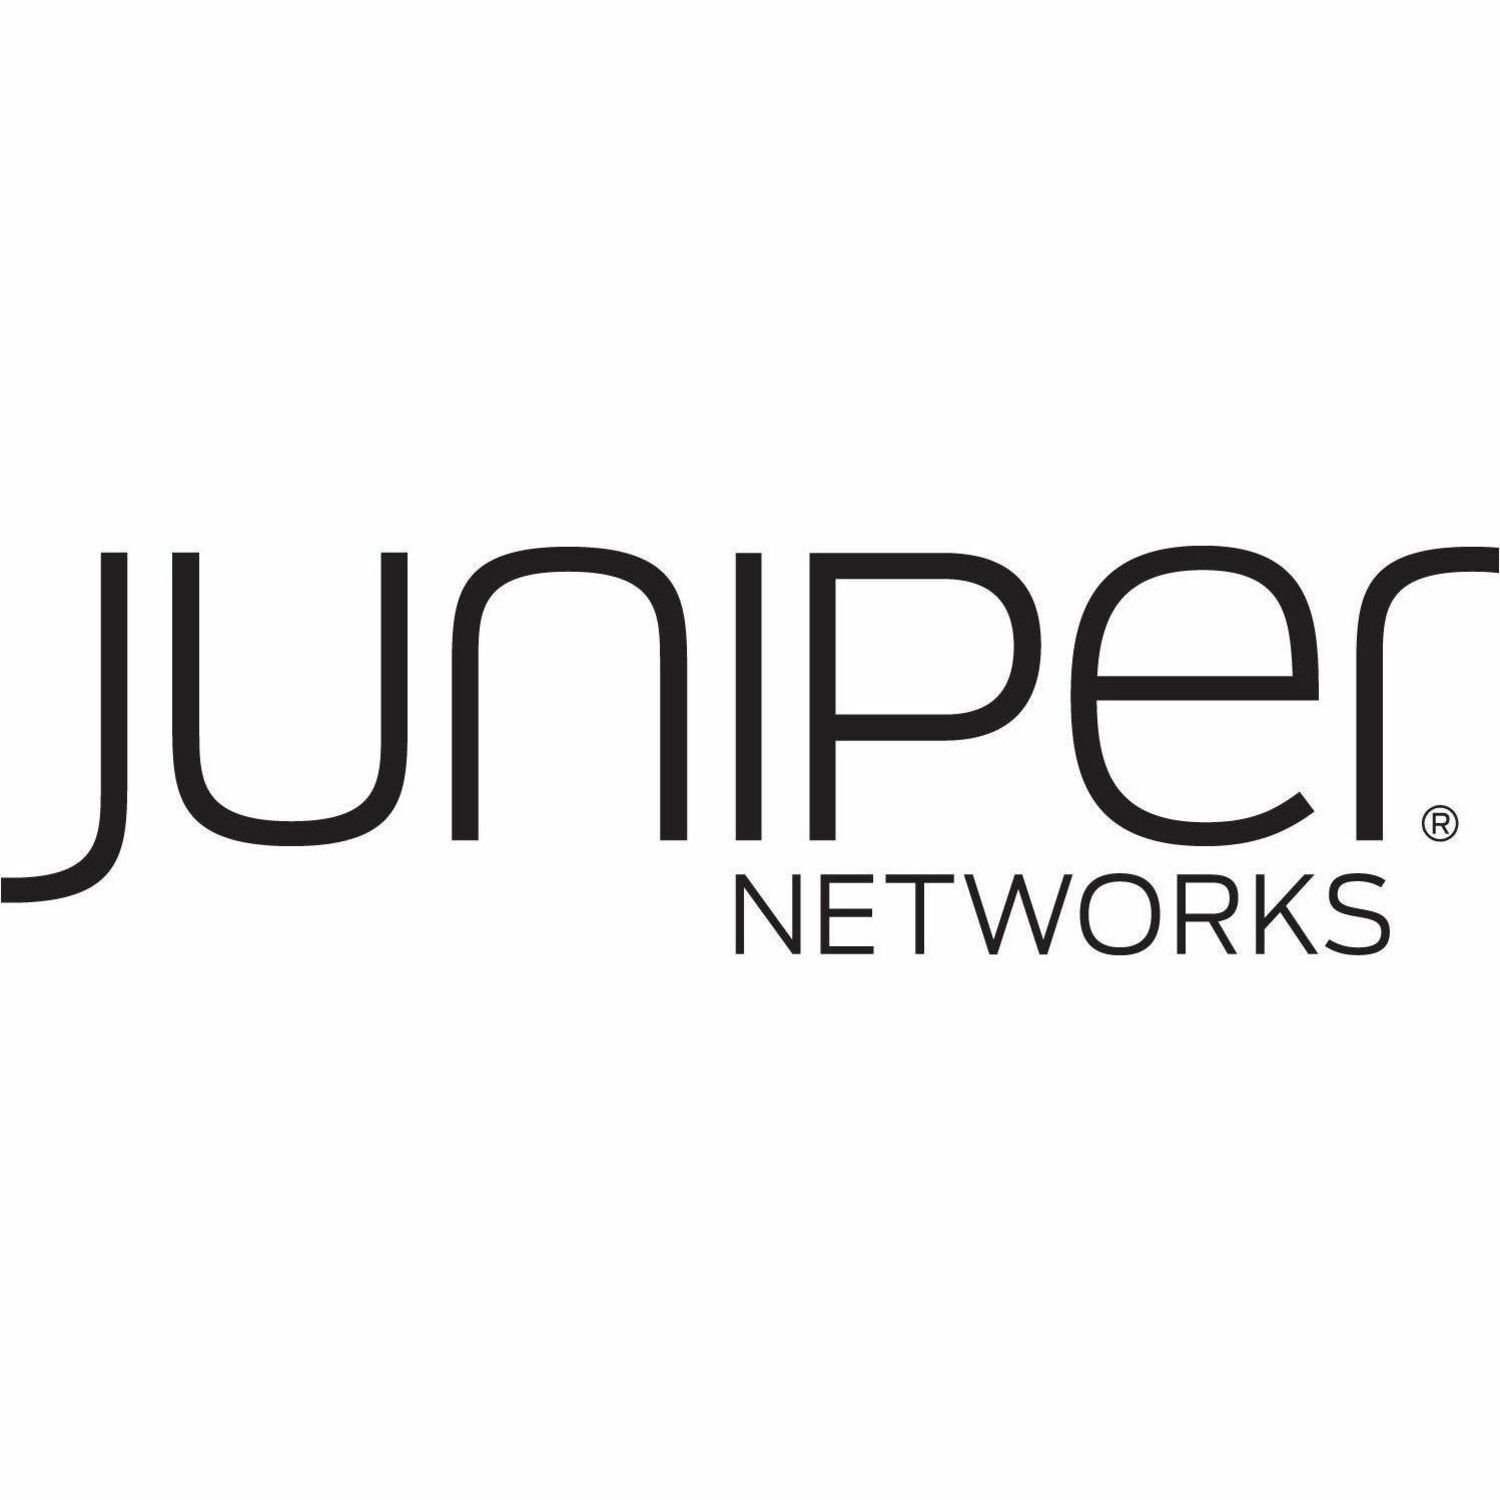 Juniper Partner Support Services (PSS) Support - Service